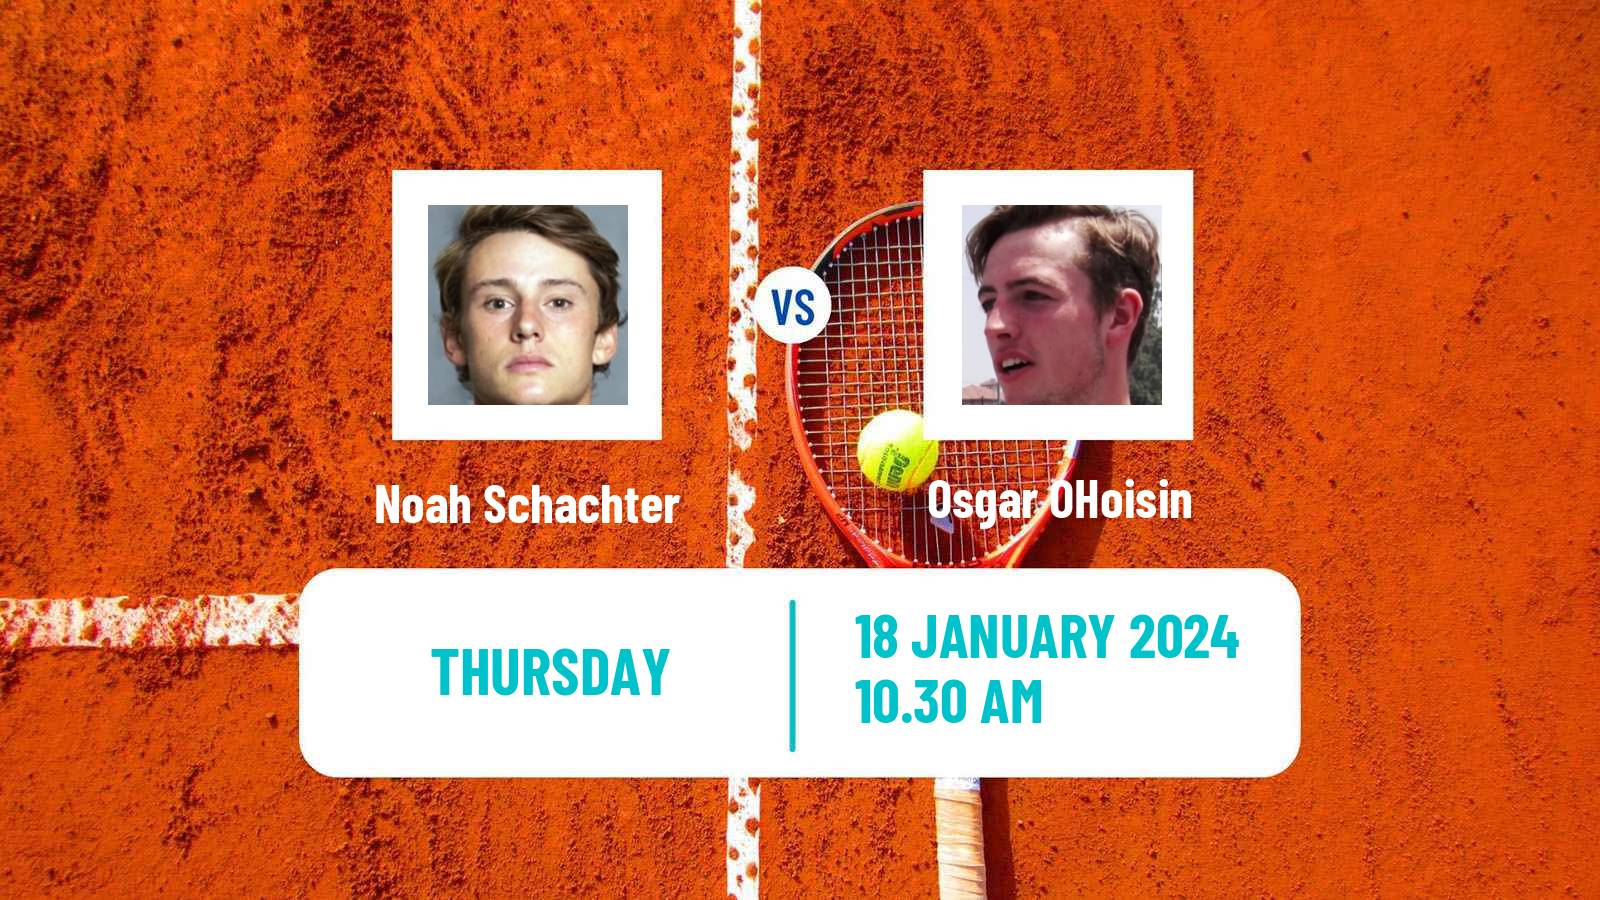 Tennis ITF M25 Ithaca Ny Men Noah Schachter - Osgar OHoisin